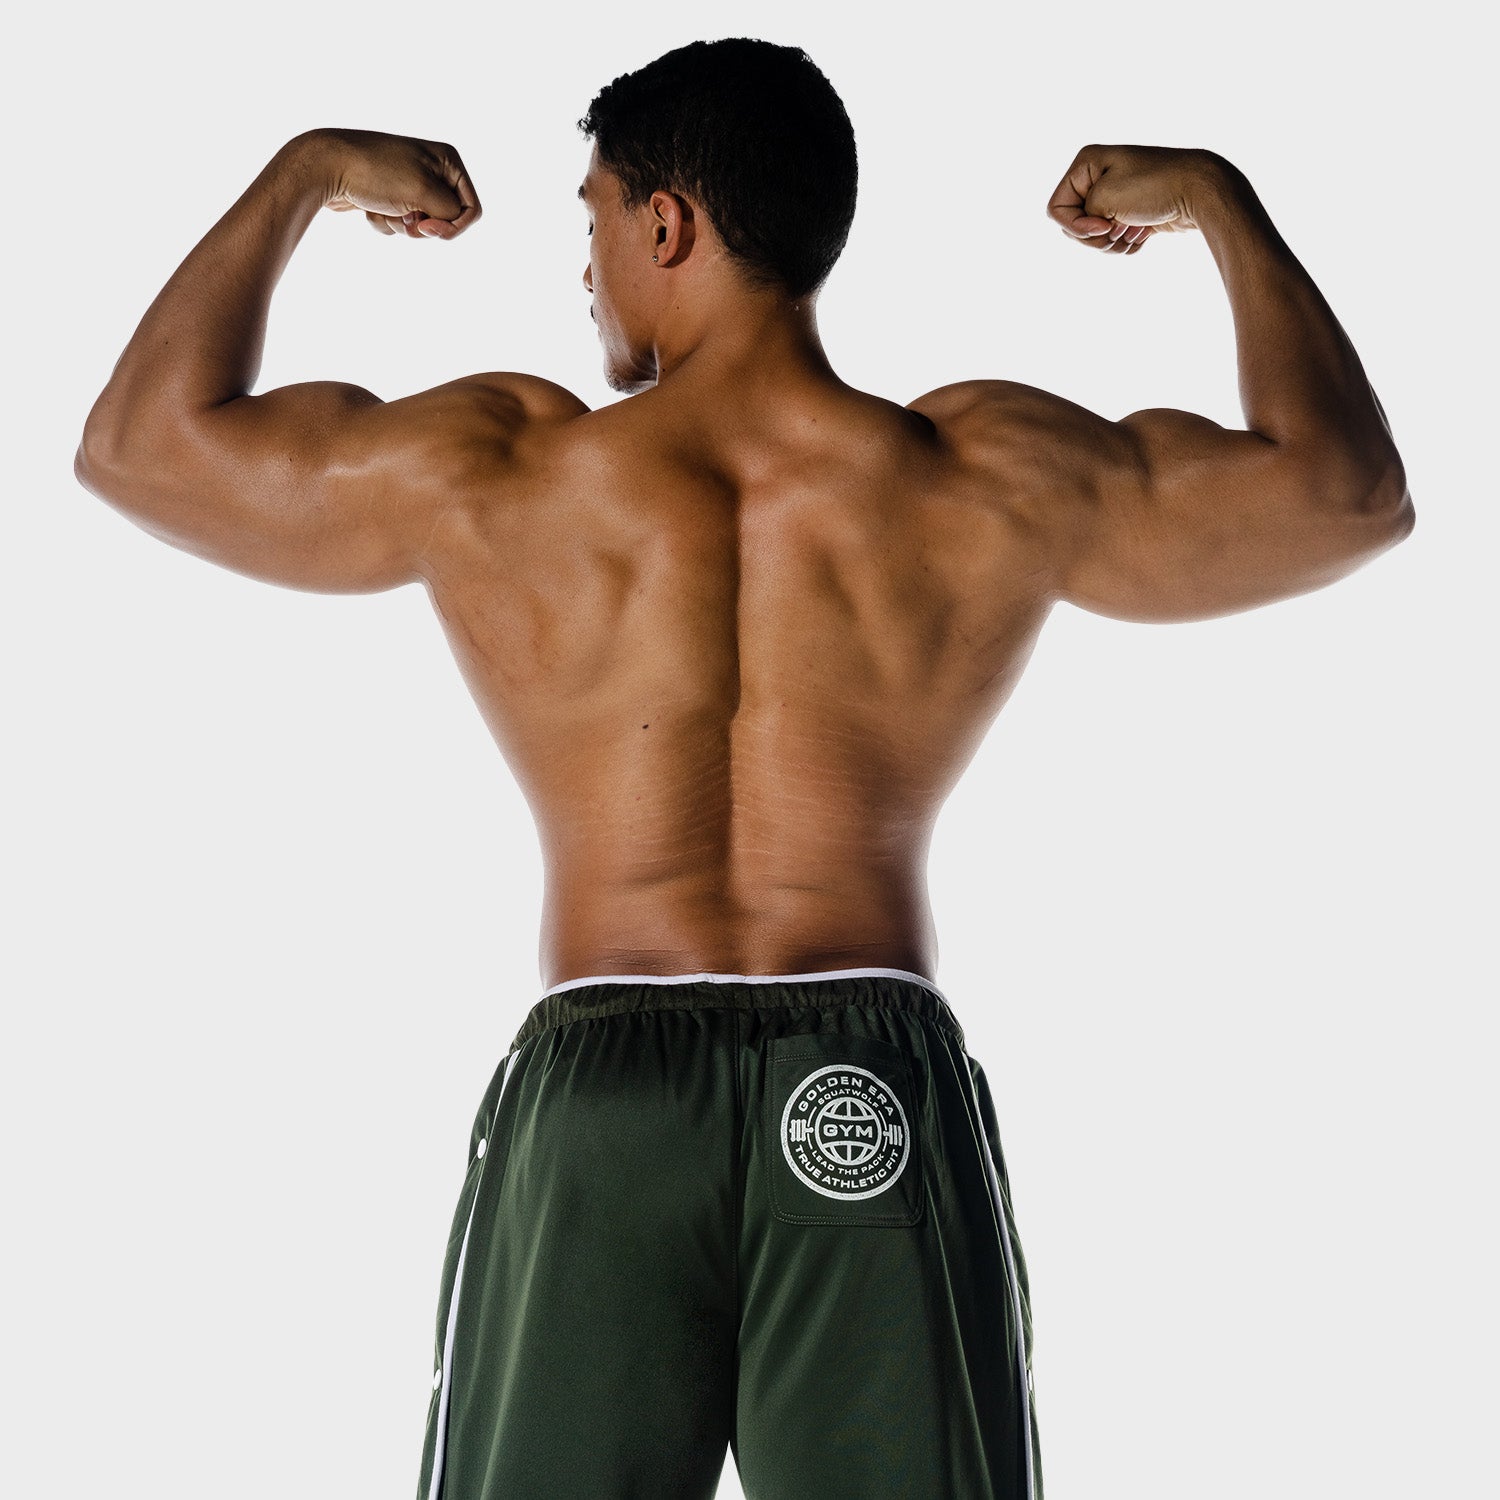 squatwolf-gym-pants-golden-era-track-pants-kombu-green-workout-clothes-for-men